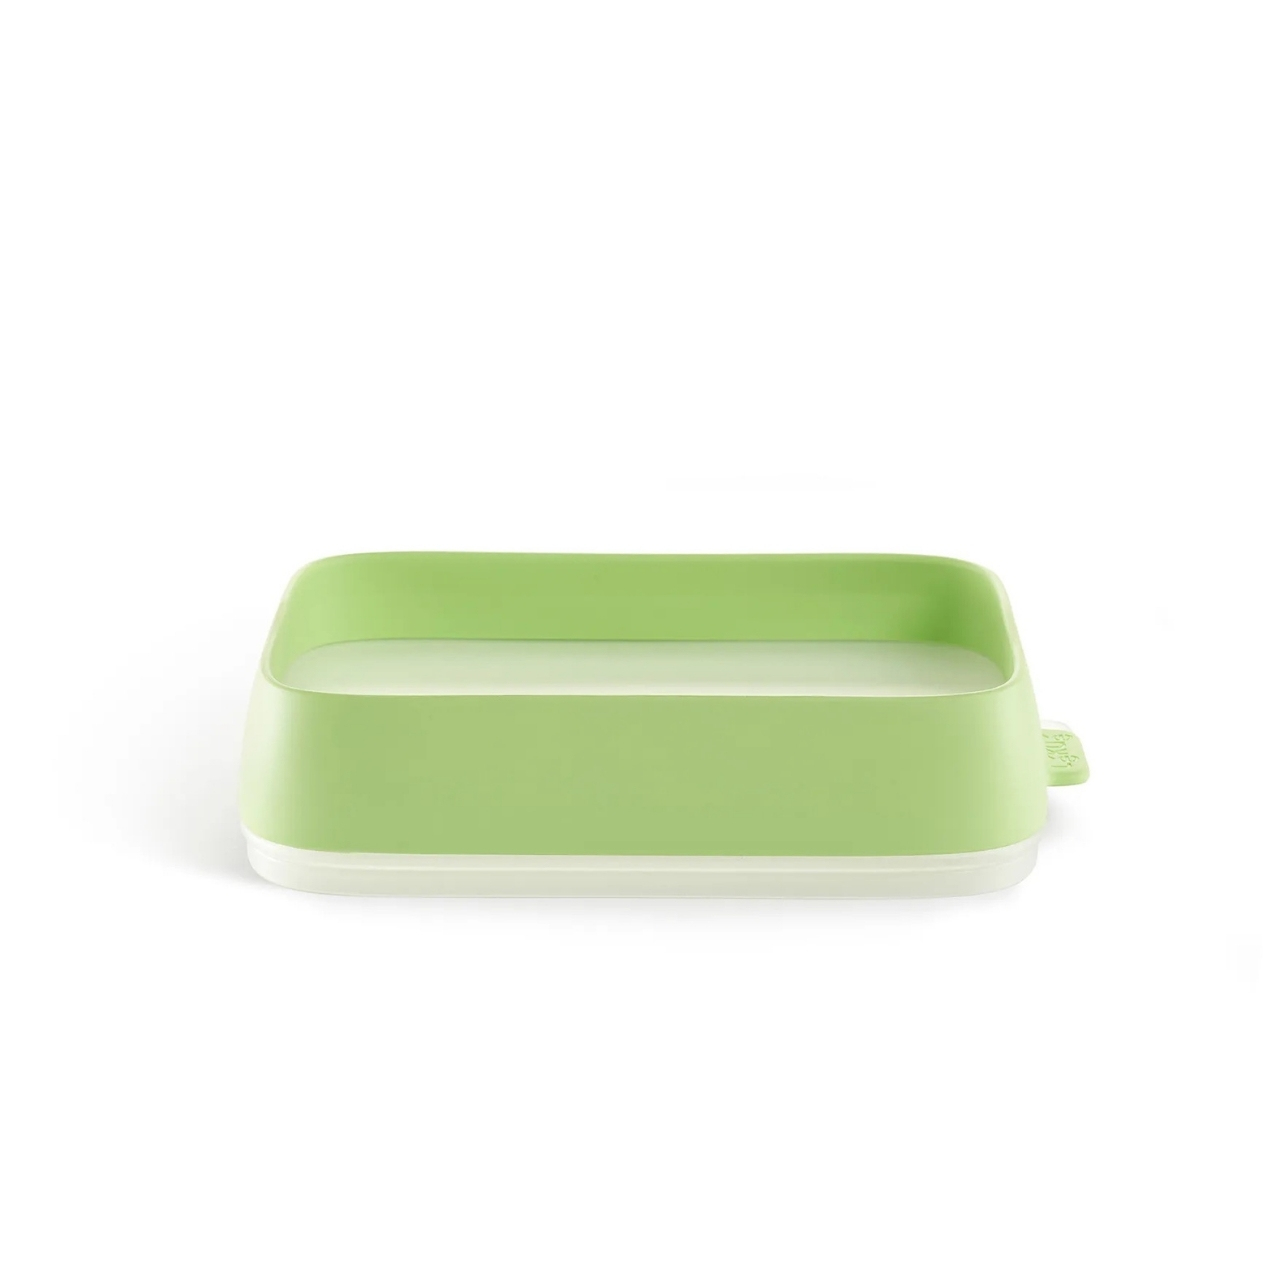 https://www.yankodesign.com/images/design_news/2022/07/reusable-seal-tray-helps-keep-veggies-fresh-and-reduce-single-use-plastic/10.jpg